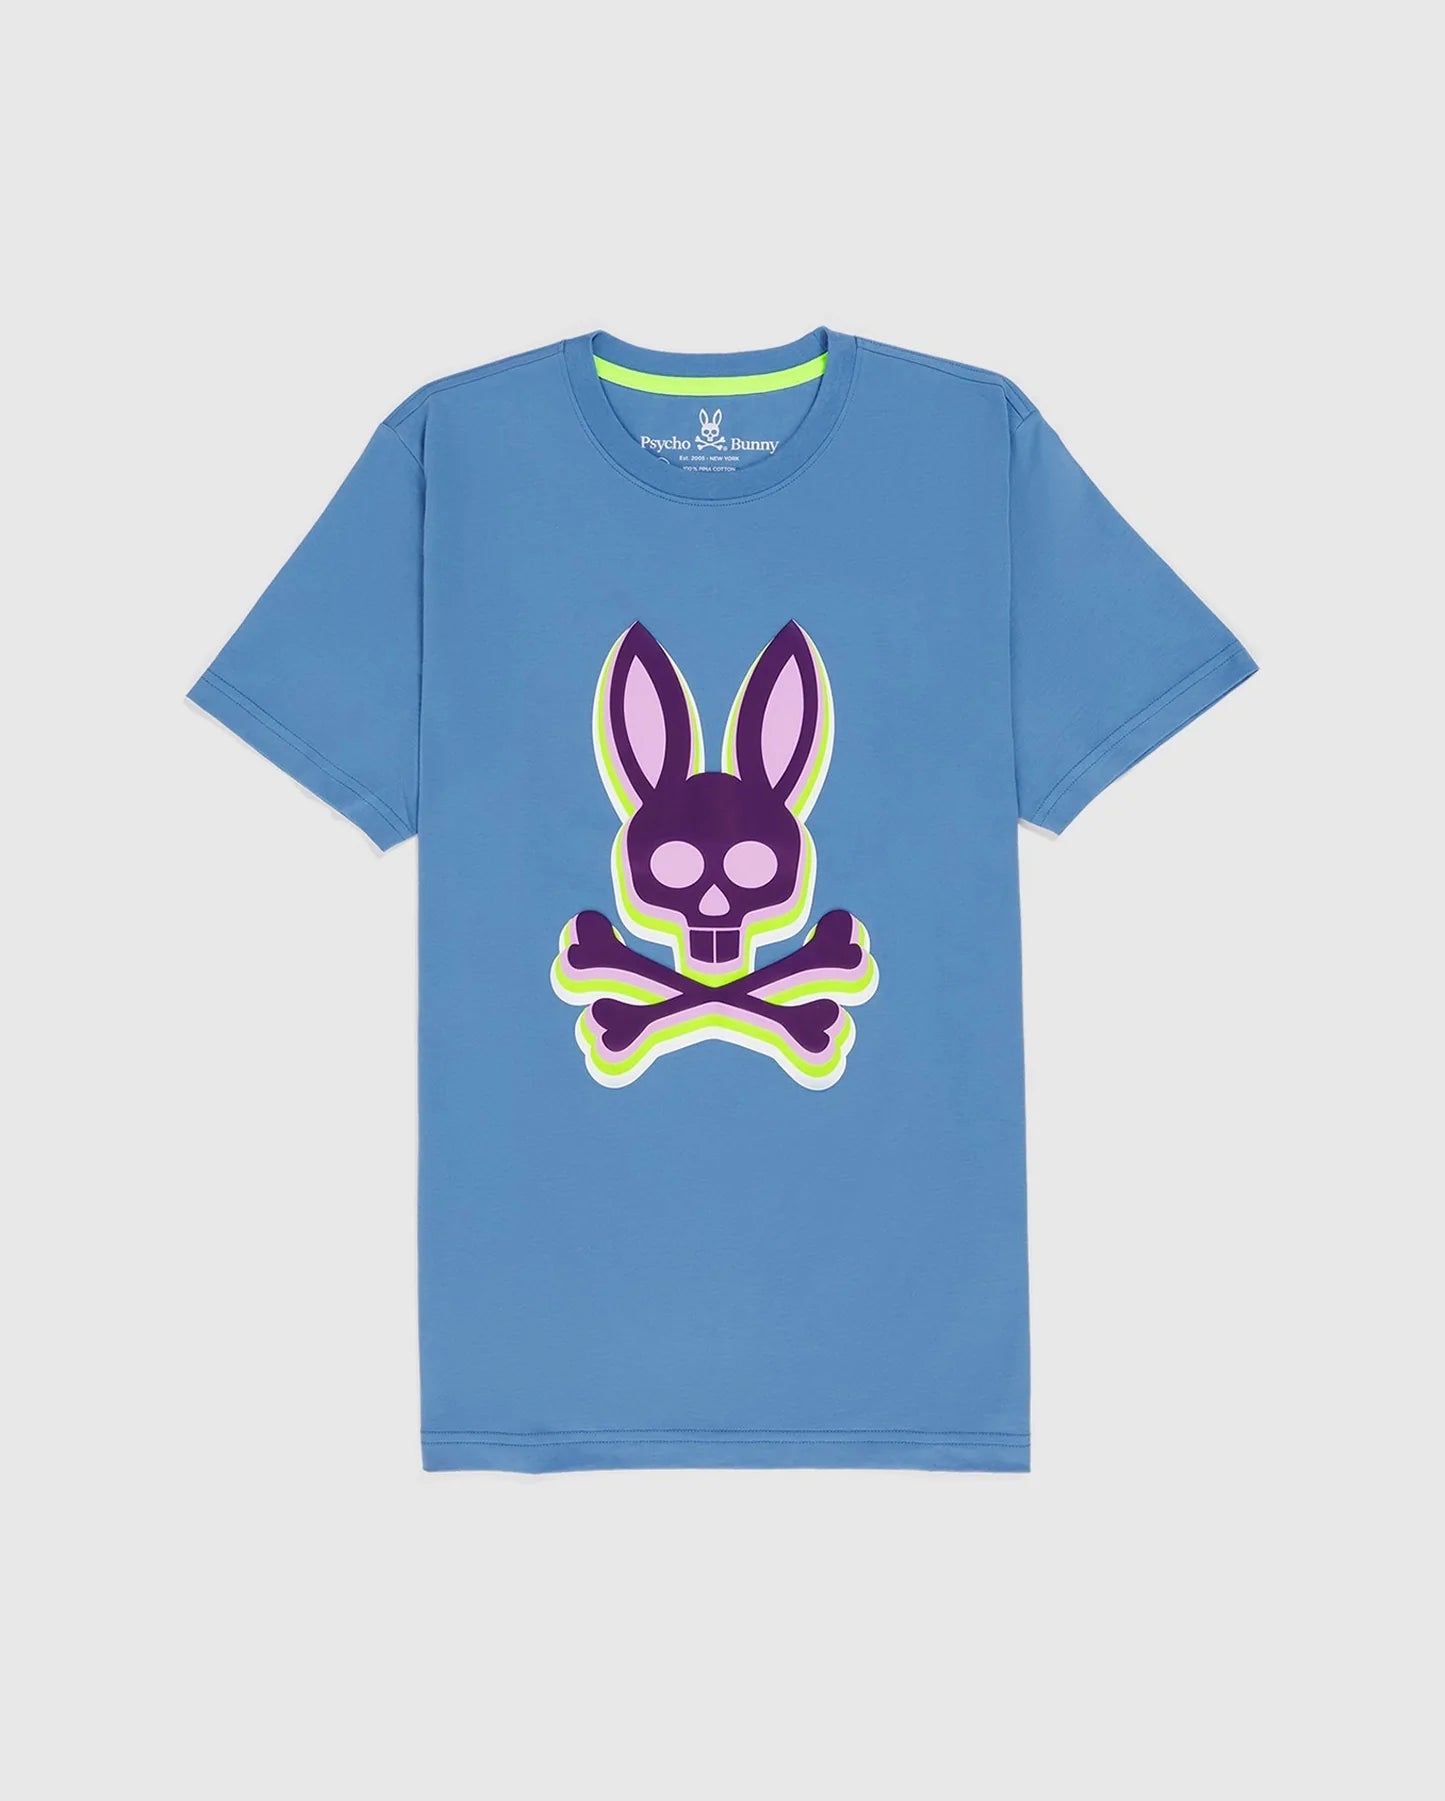 Psycho Bunny – NYCMode